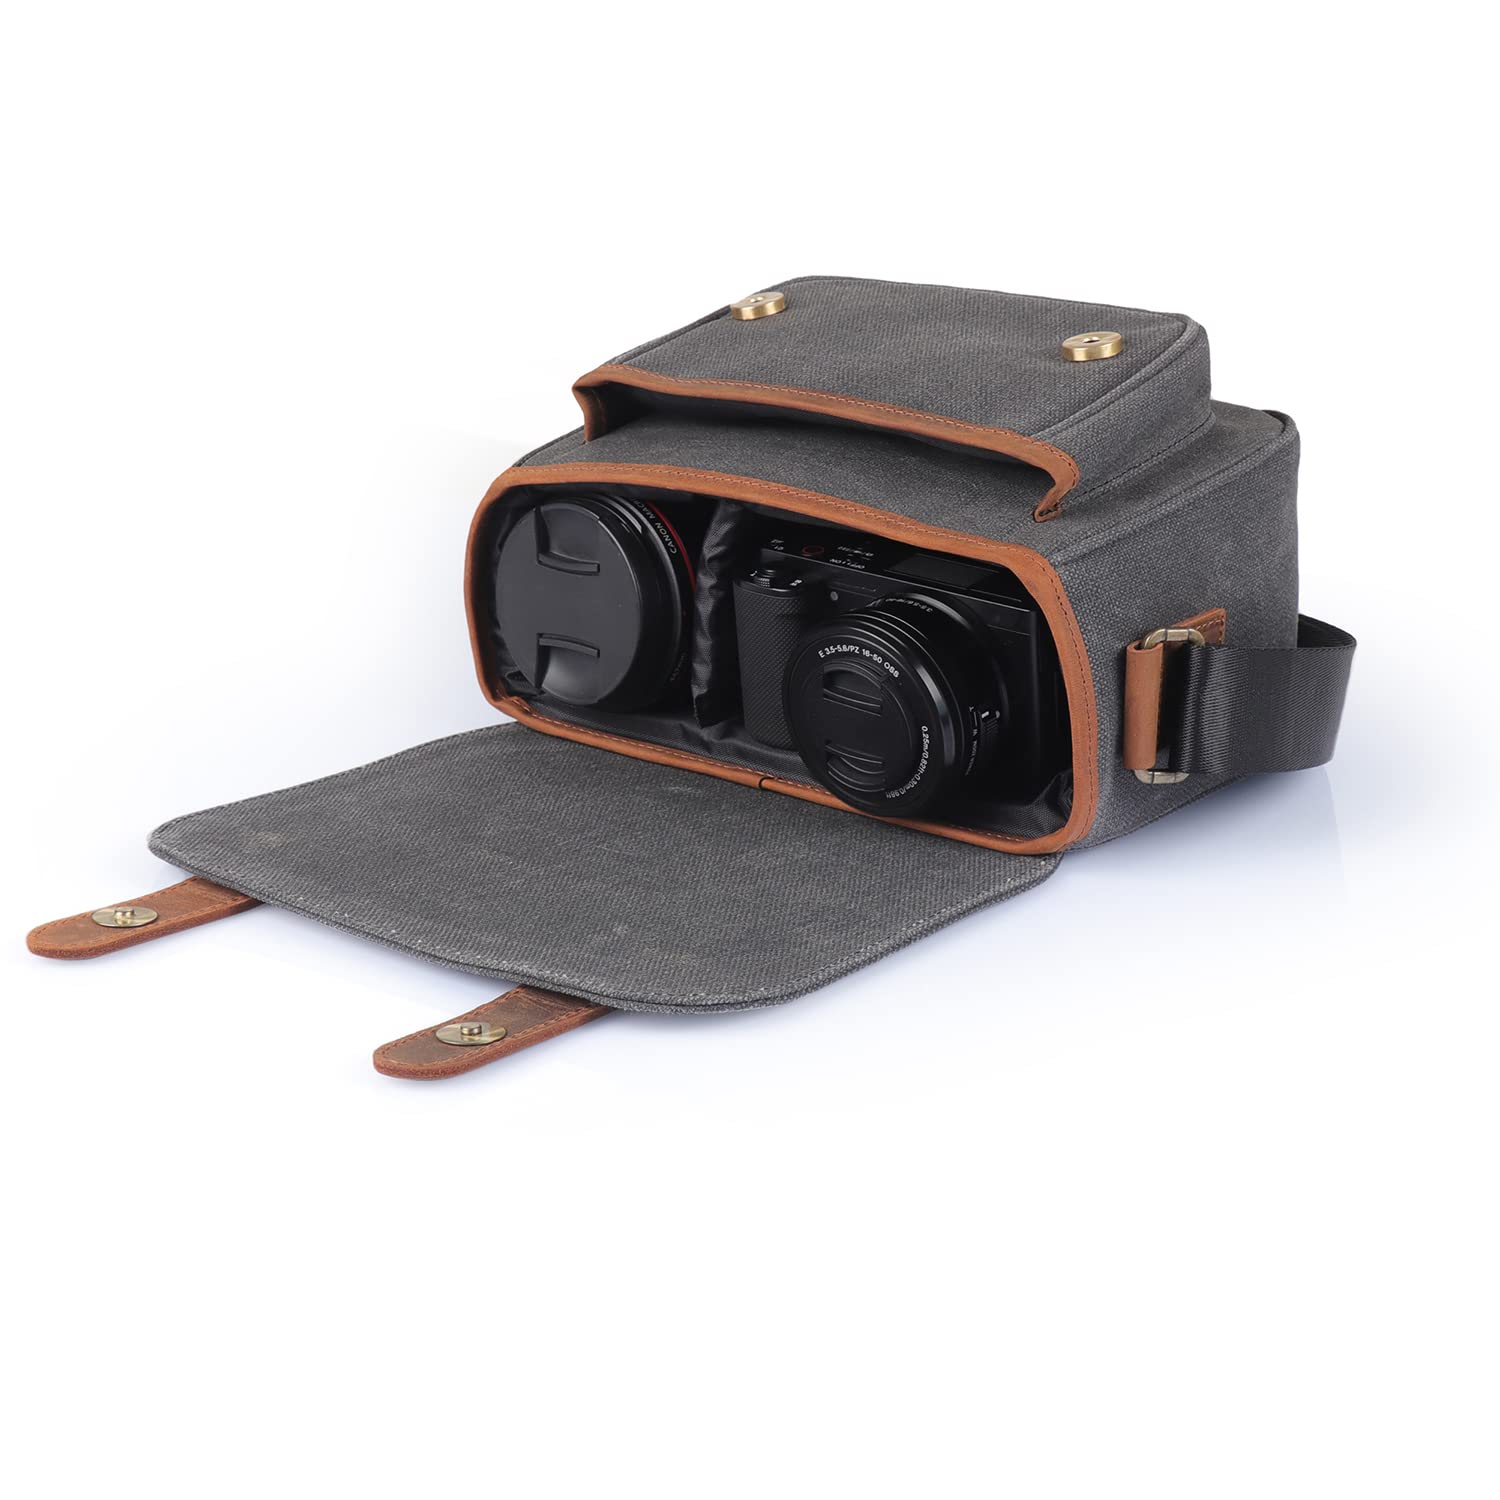 MegaGear Sequoia Waterproof Camera Case For Canon, Nikon, Sony System Cameras, Dslr Cameras,Brown